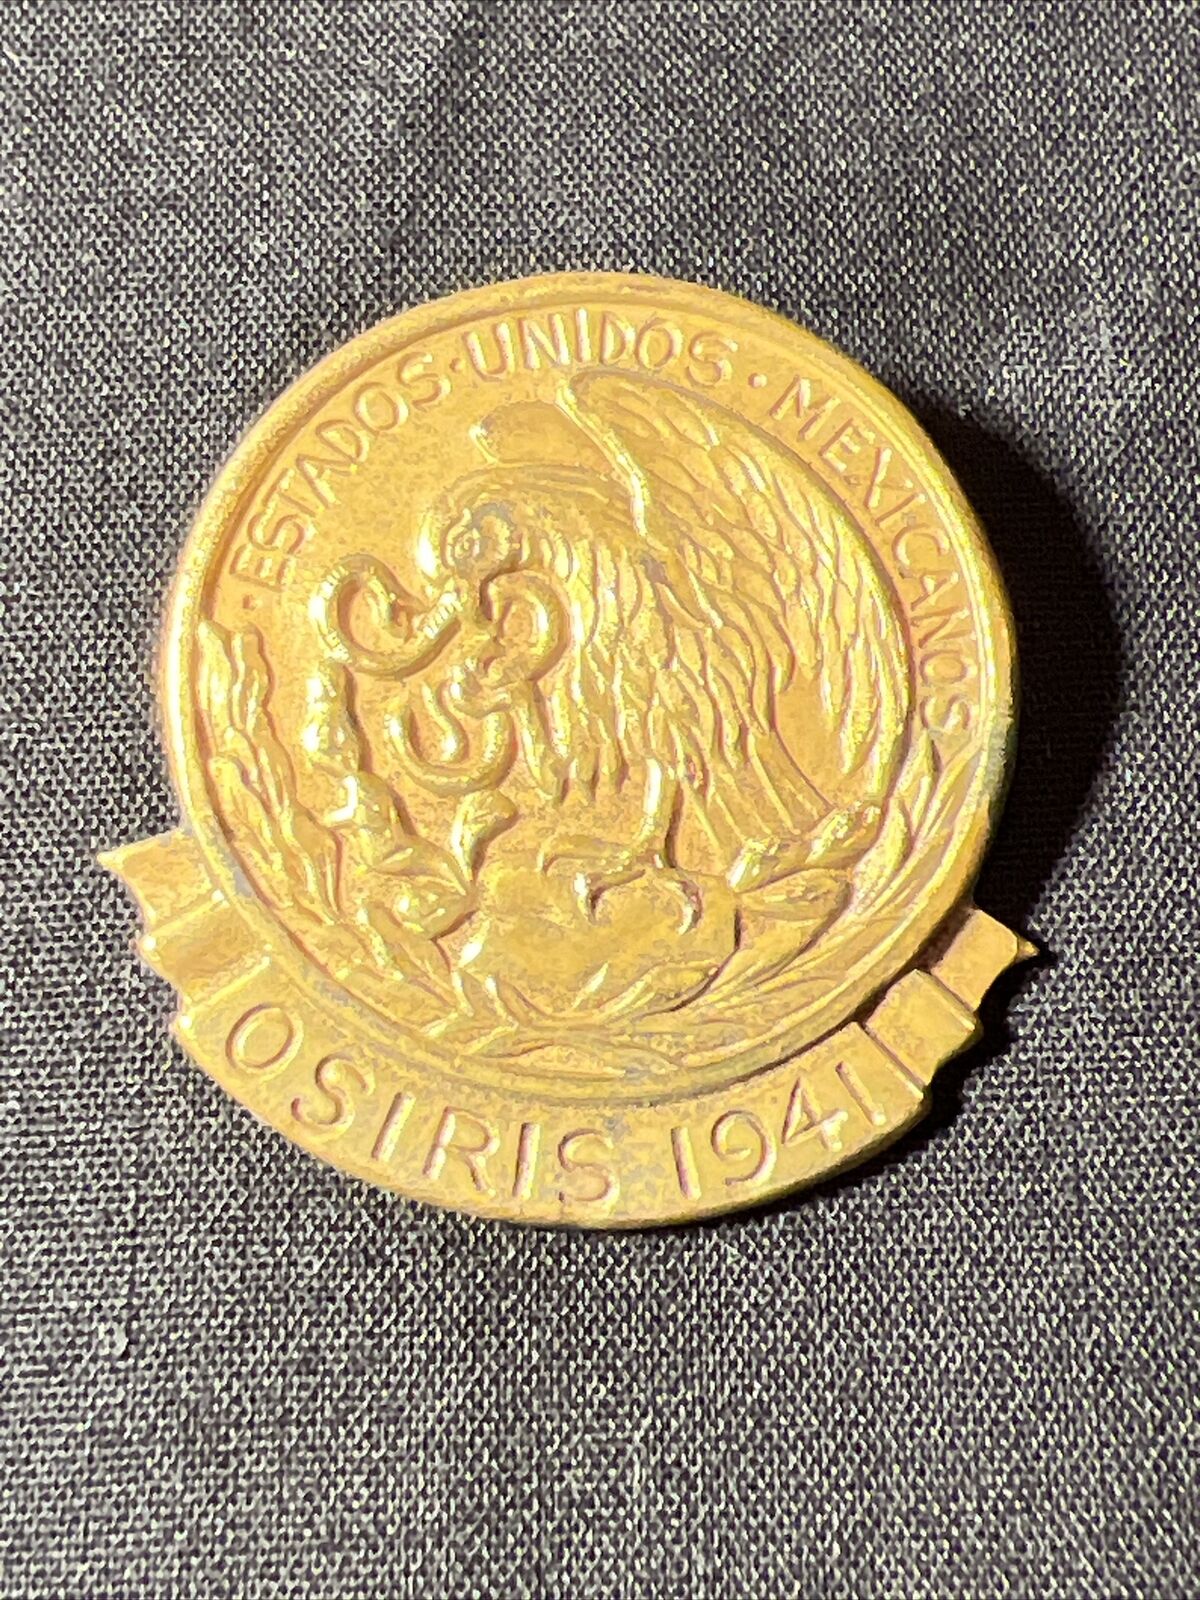 1941 Osiris Pin Mexico Mexican Coin Design New Orleans Mardi Gras Krewe Favor